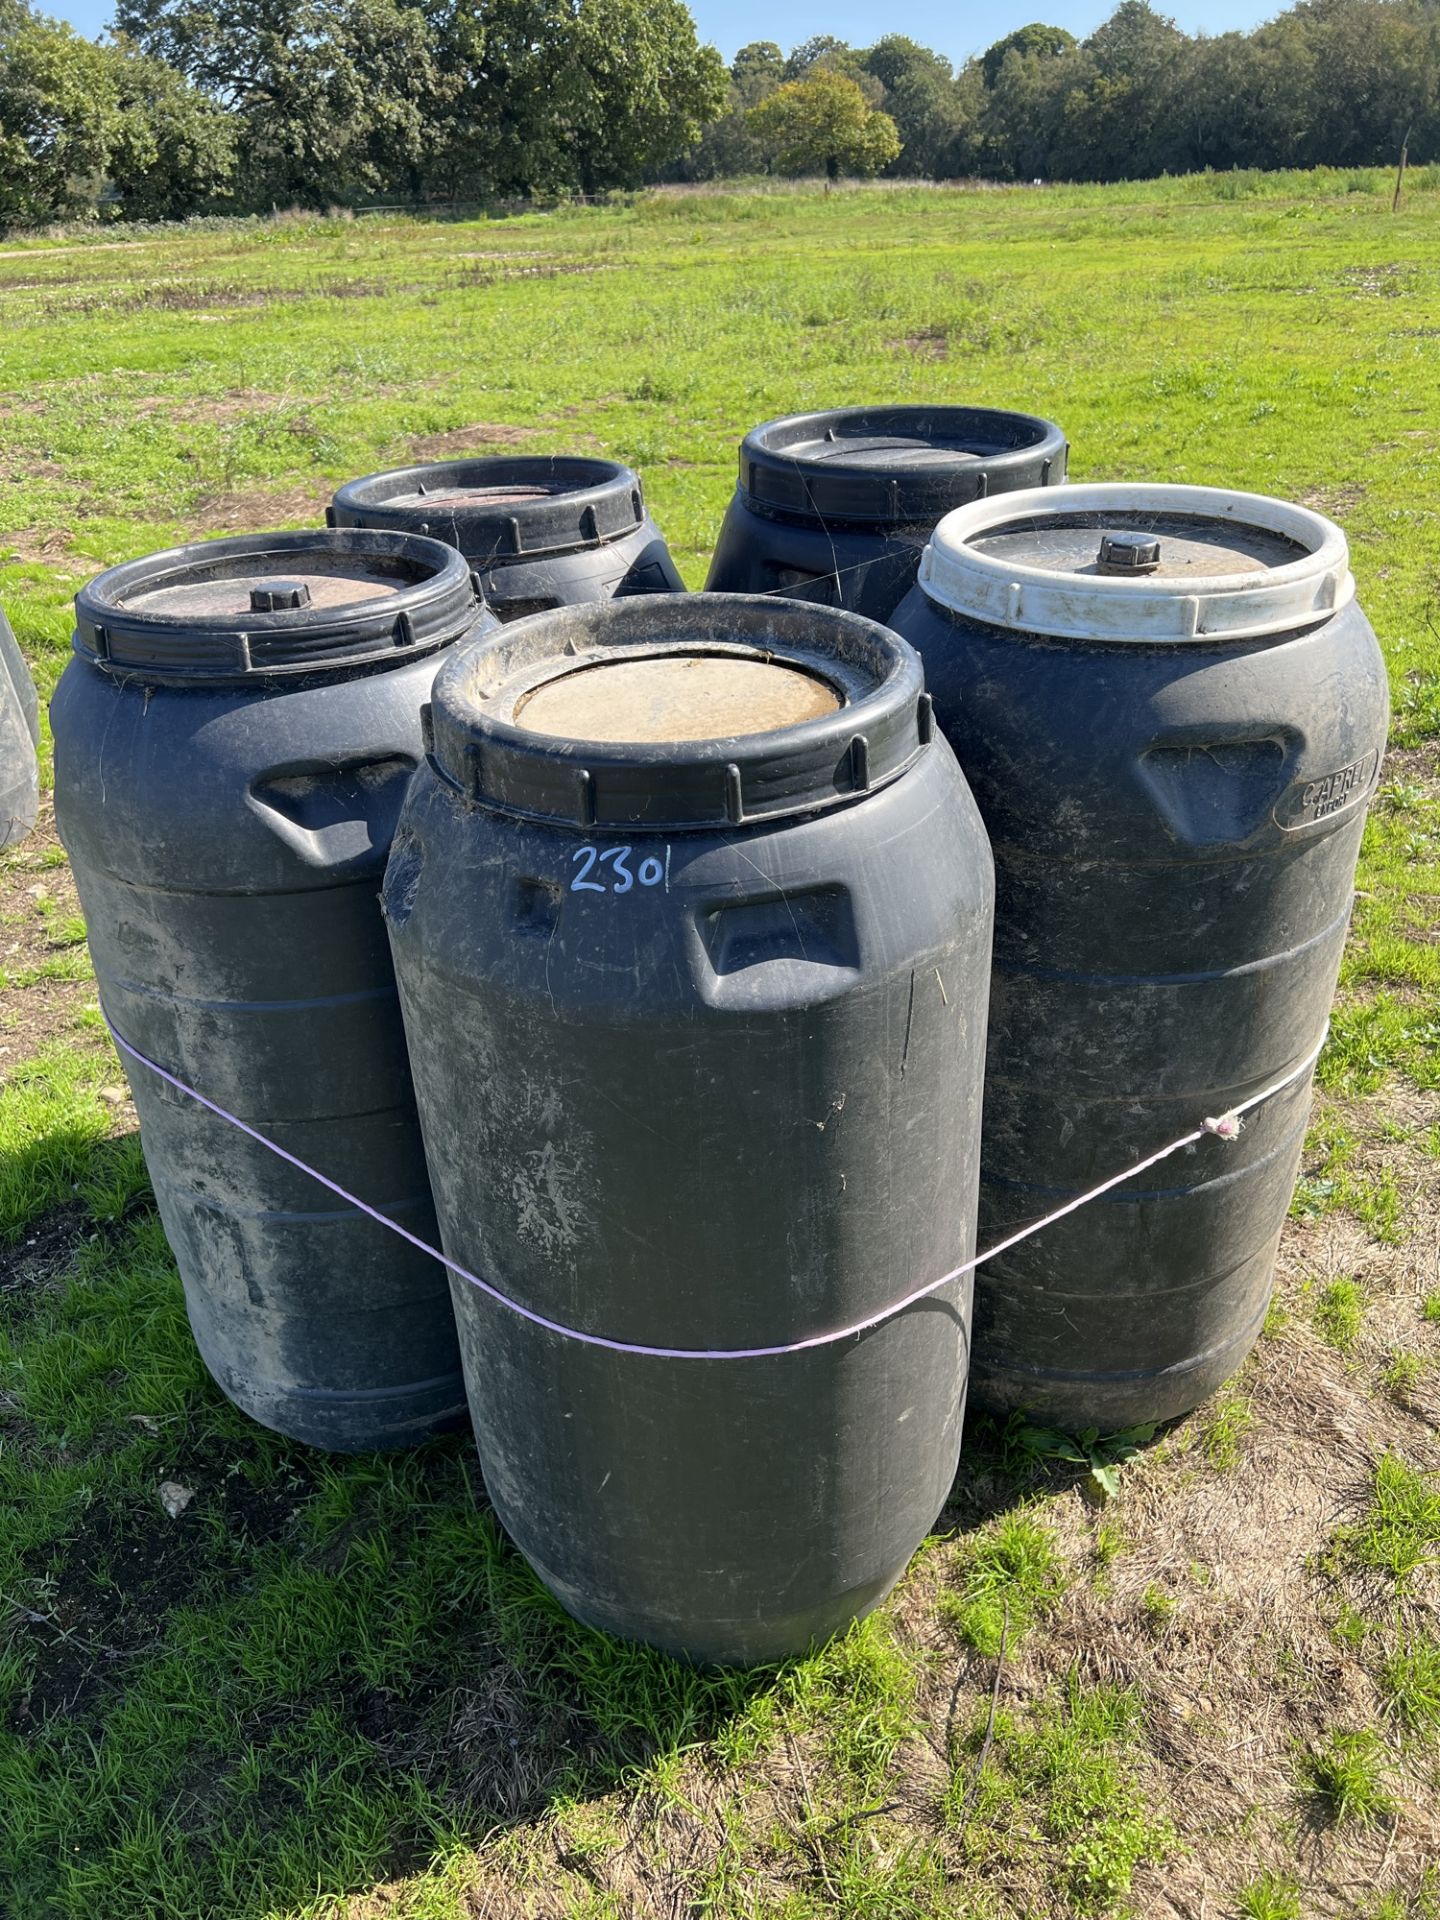 5 plastic 40 gallon drums